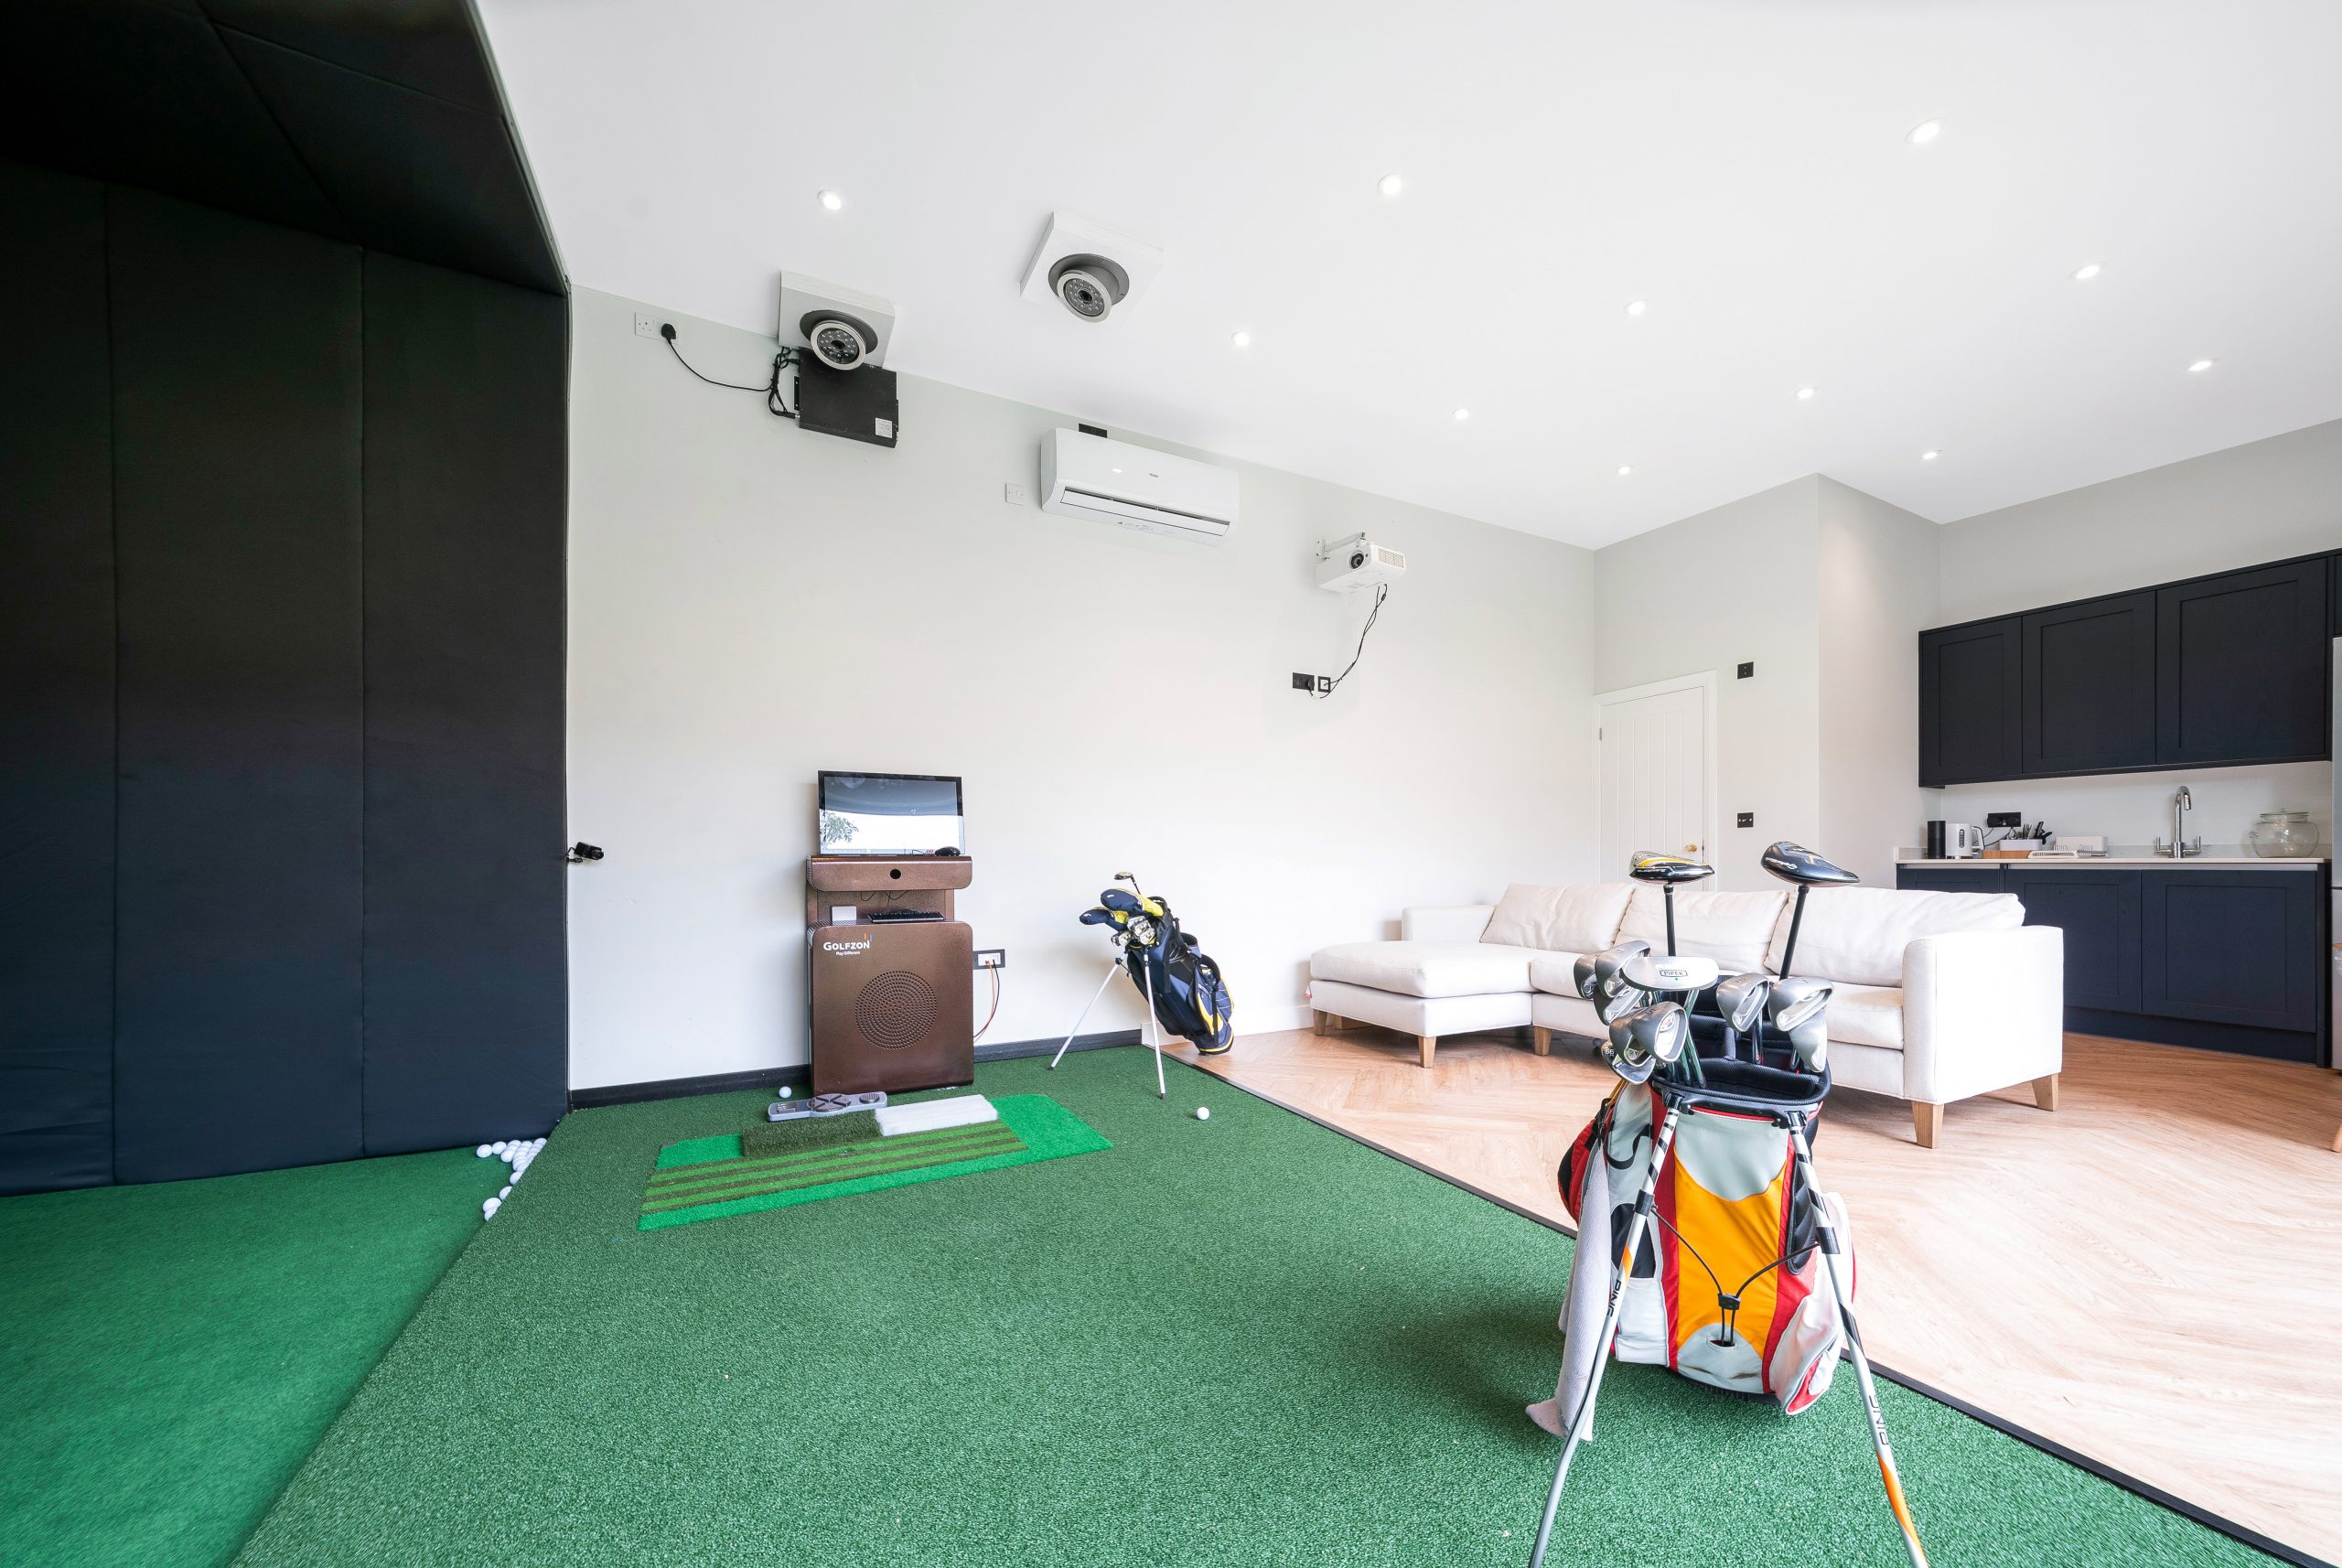 golf simulator garden room london